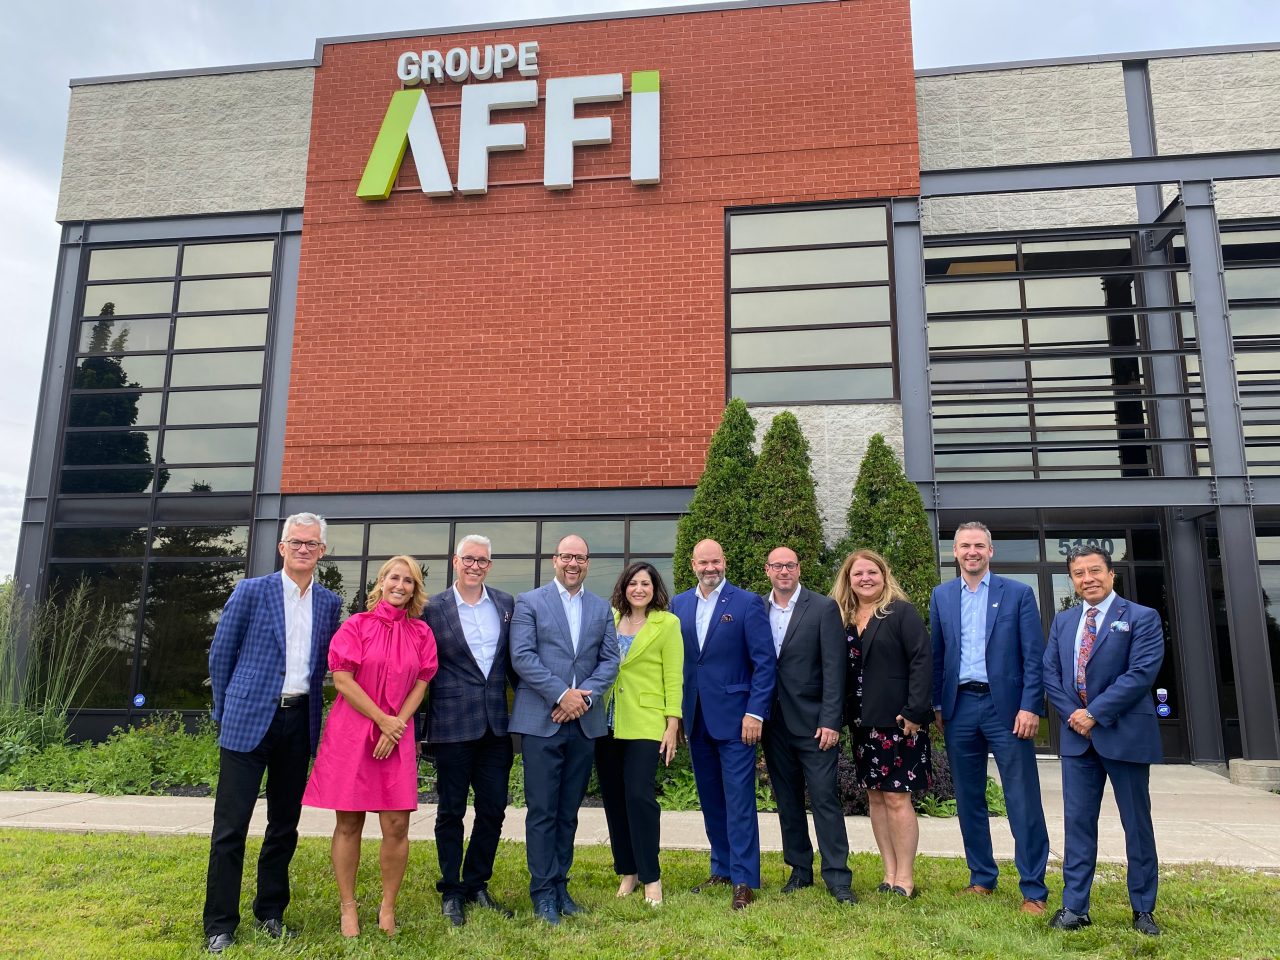 National Bank and Investissement Québec's representatives visiting Groupe AFFI's premises